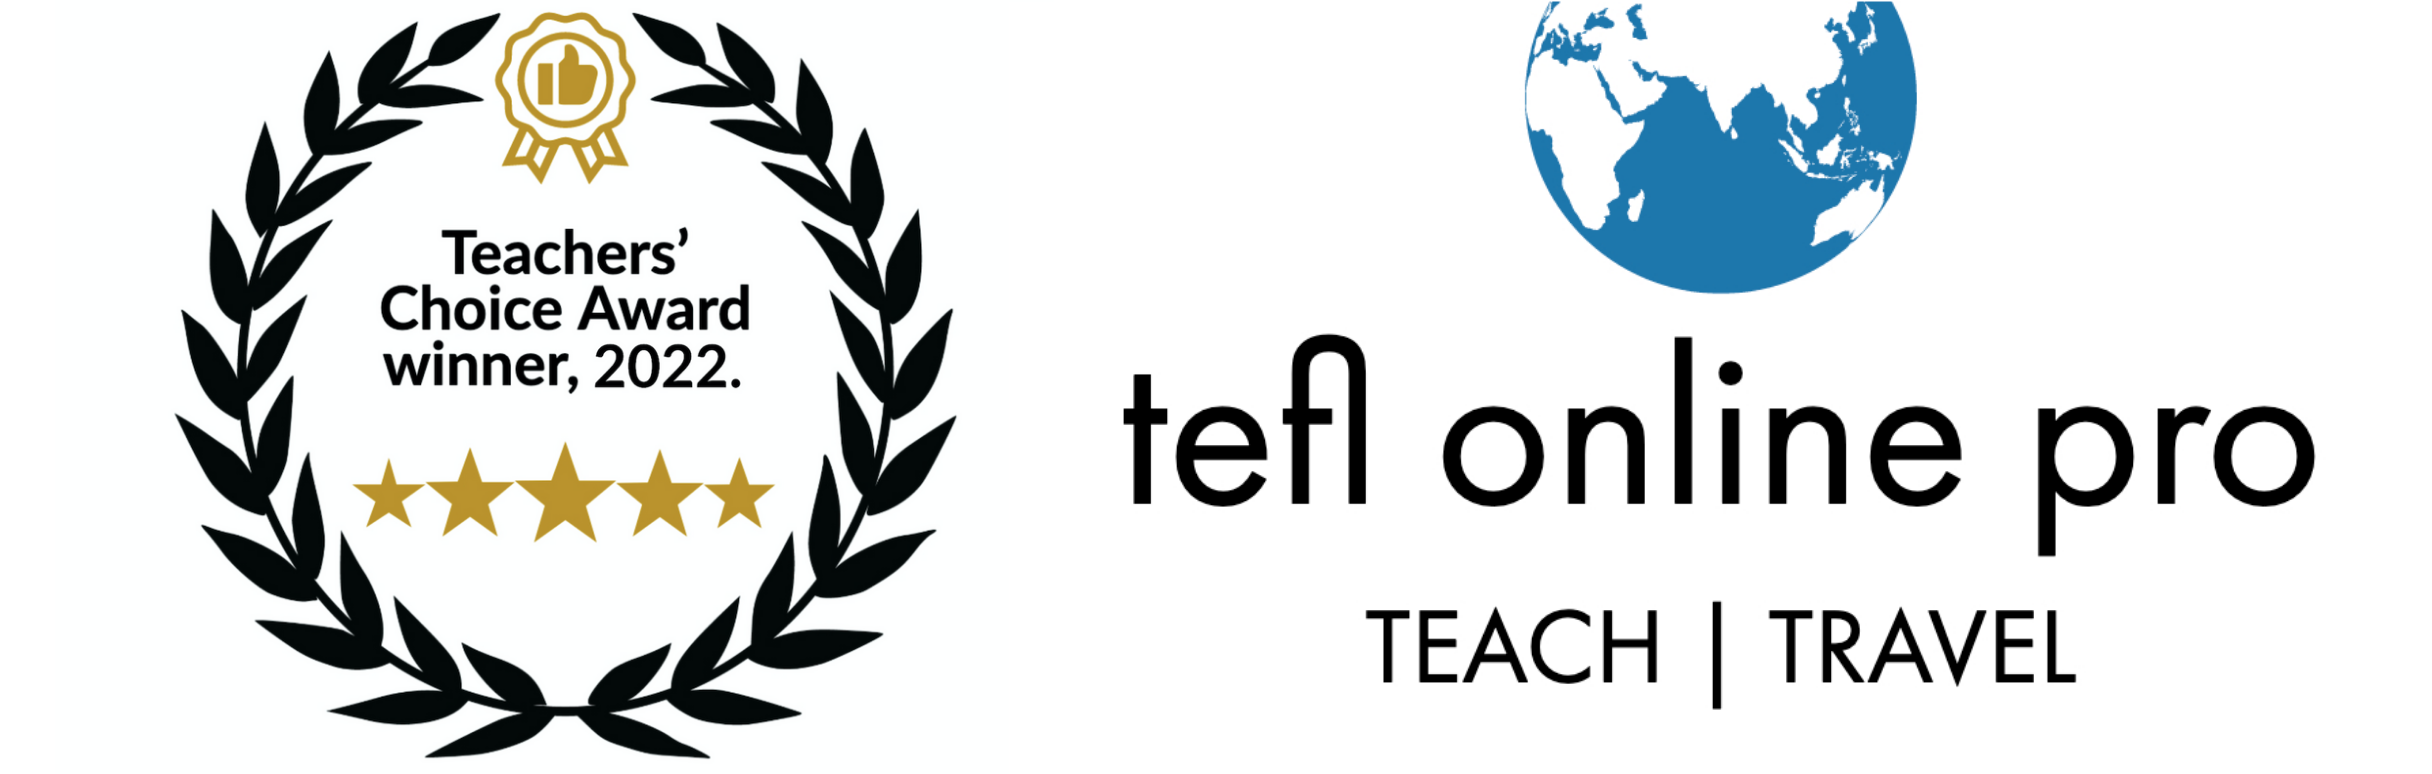 teflonlinepro.com student reviews | We are a 5-Star TEFL/TESOL online program